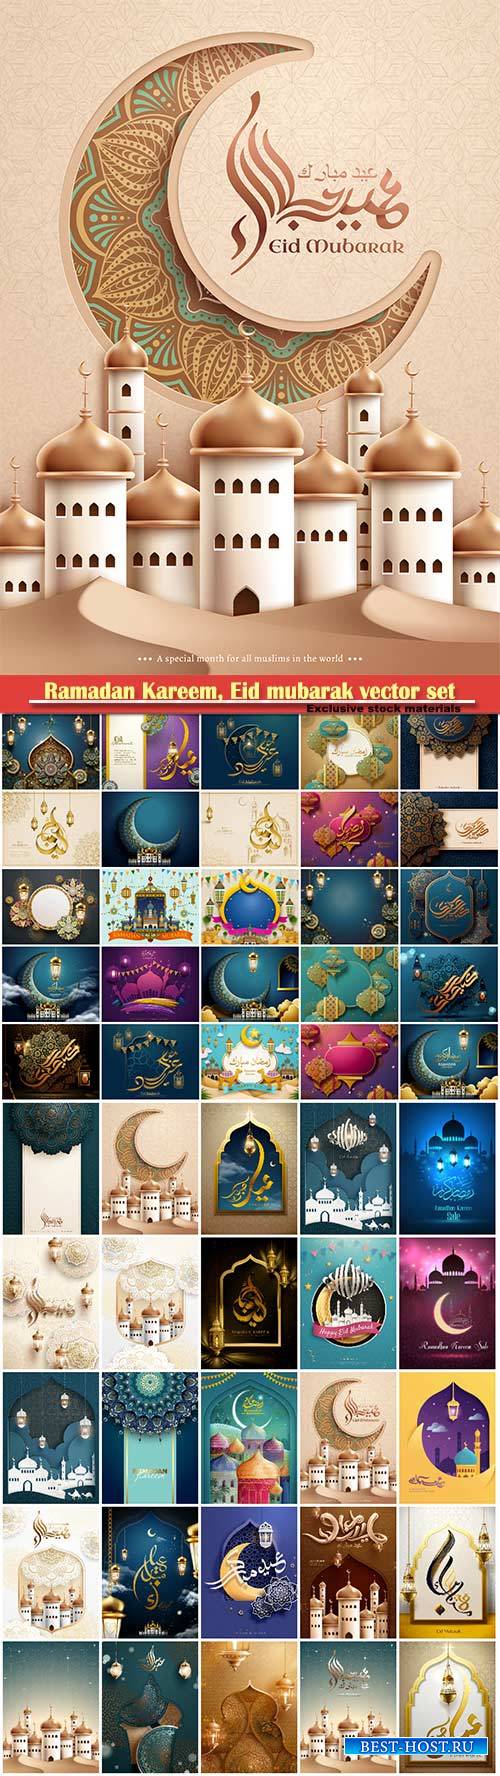 Ramadan Kareem, Eid mubarak vector set # 2